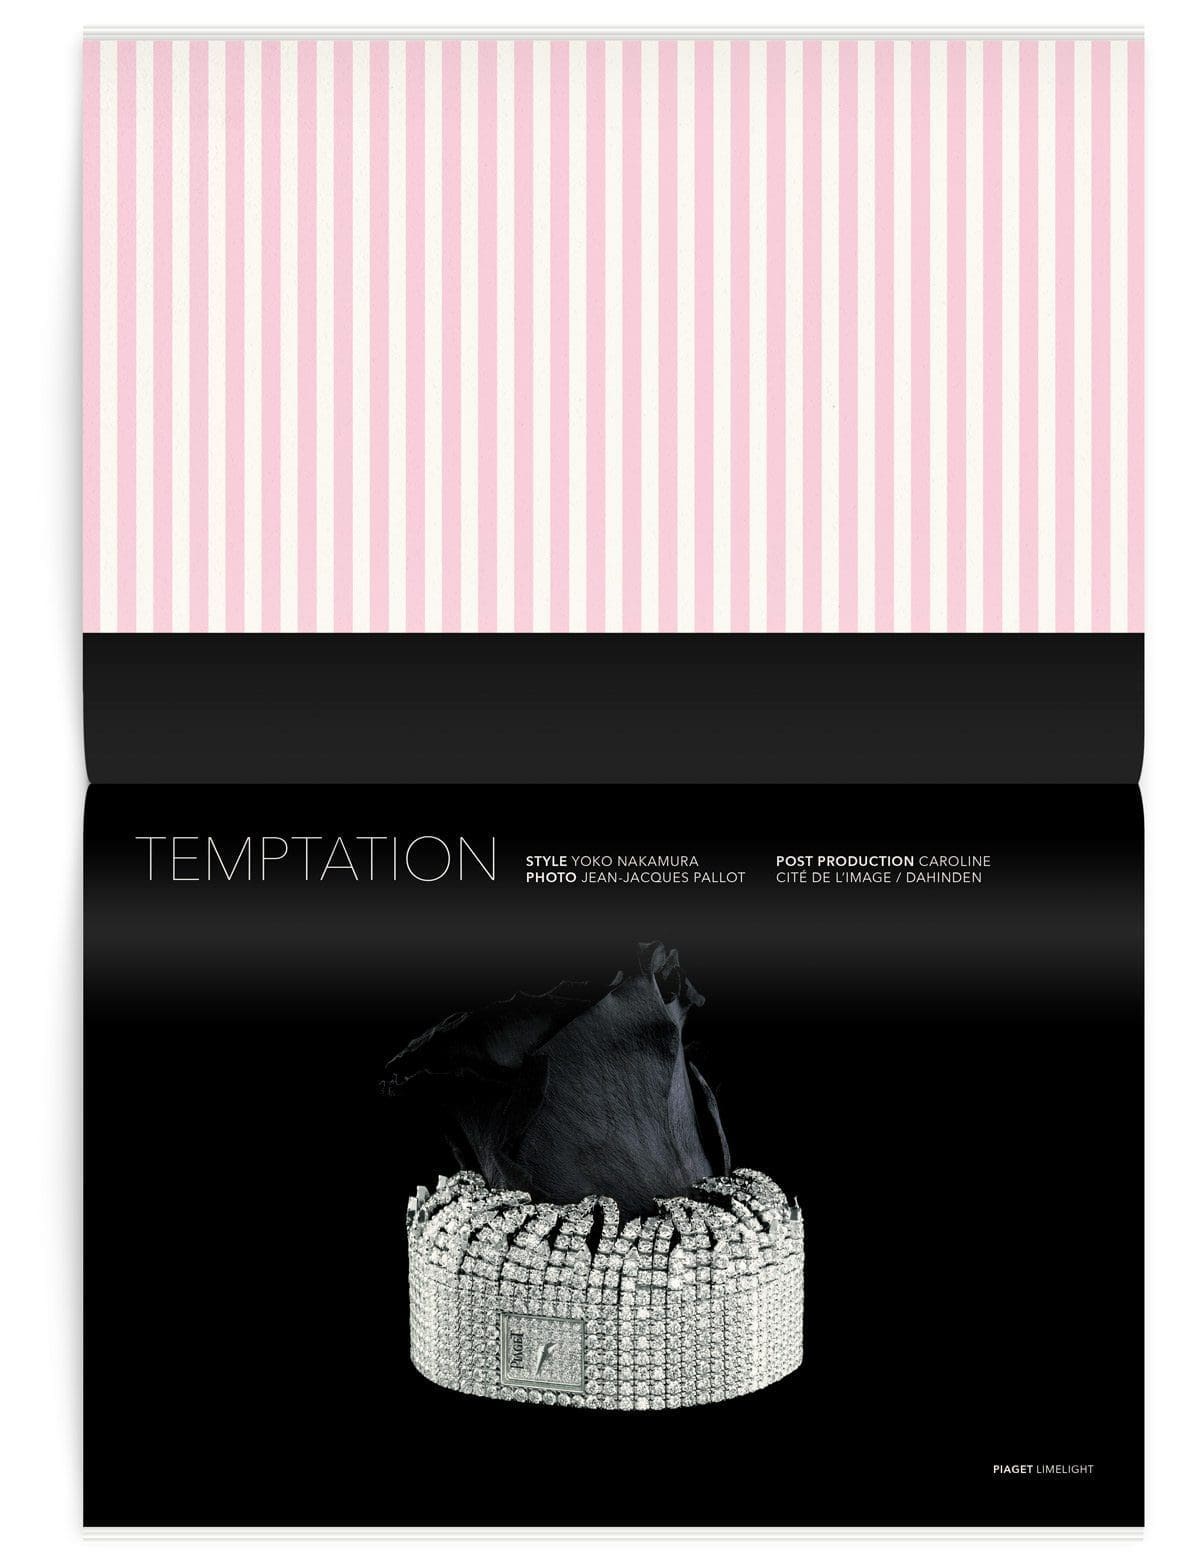 La page temptation, photo de Jean-Jacques Pallot, magazine Iconofly, revue d’art, design IchetKar